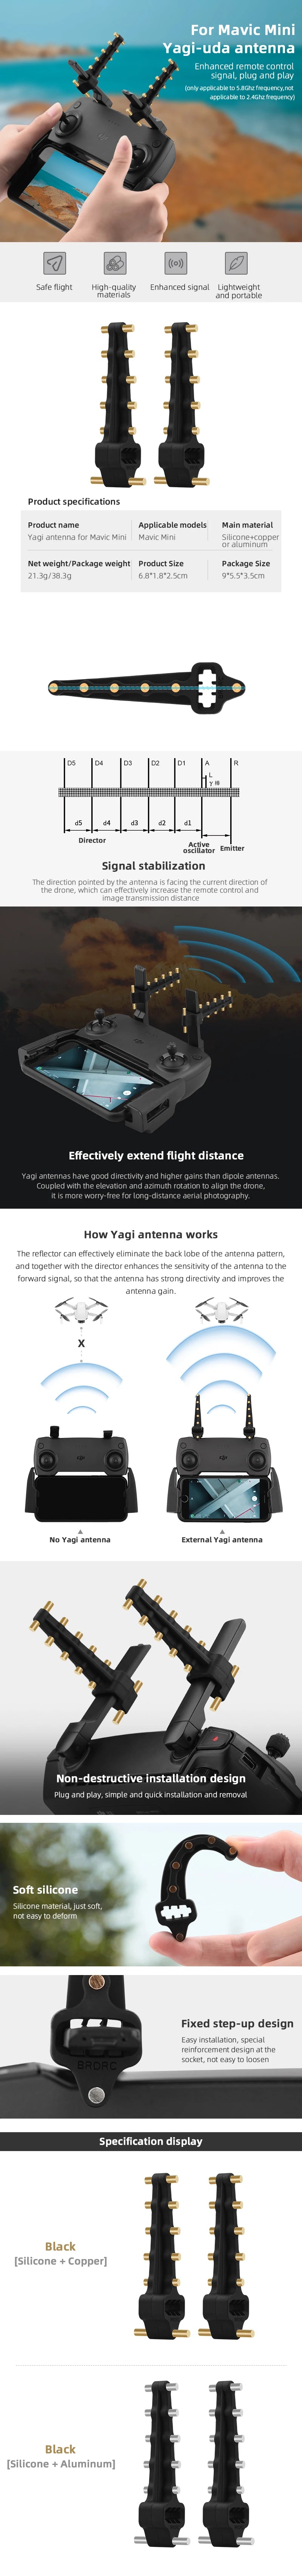 Yagi Antenna, Yagi antennas have good directivity and higher gains than dipole antennas .